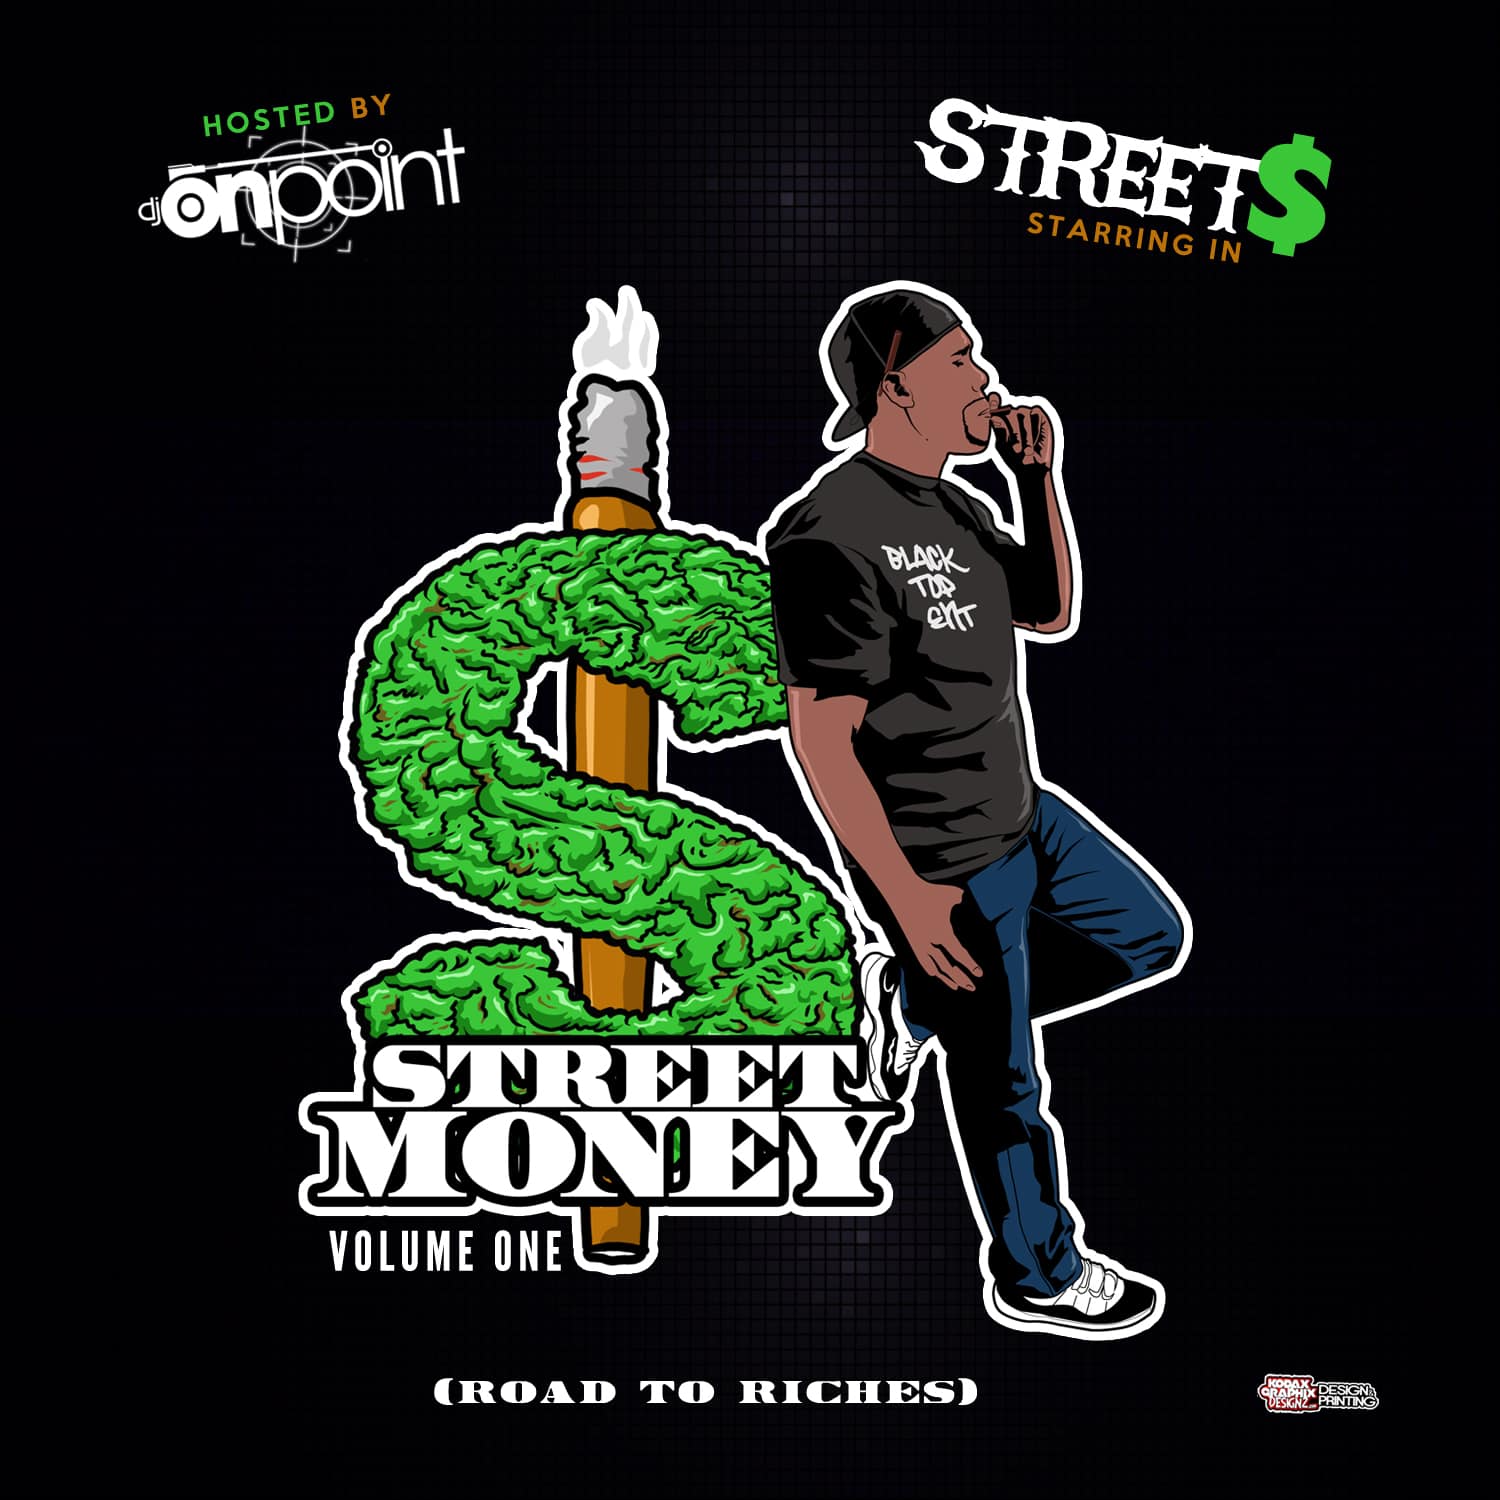 Street$ aka Street Money